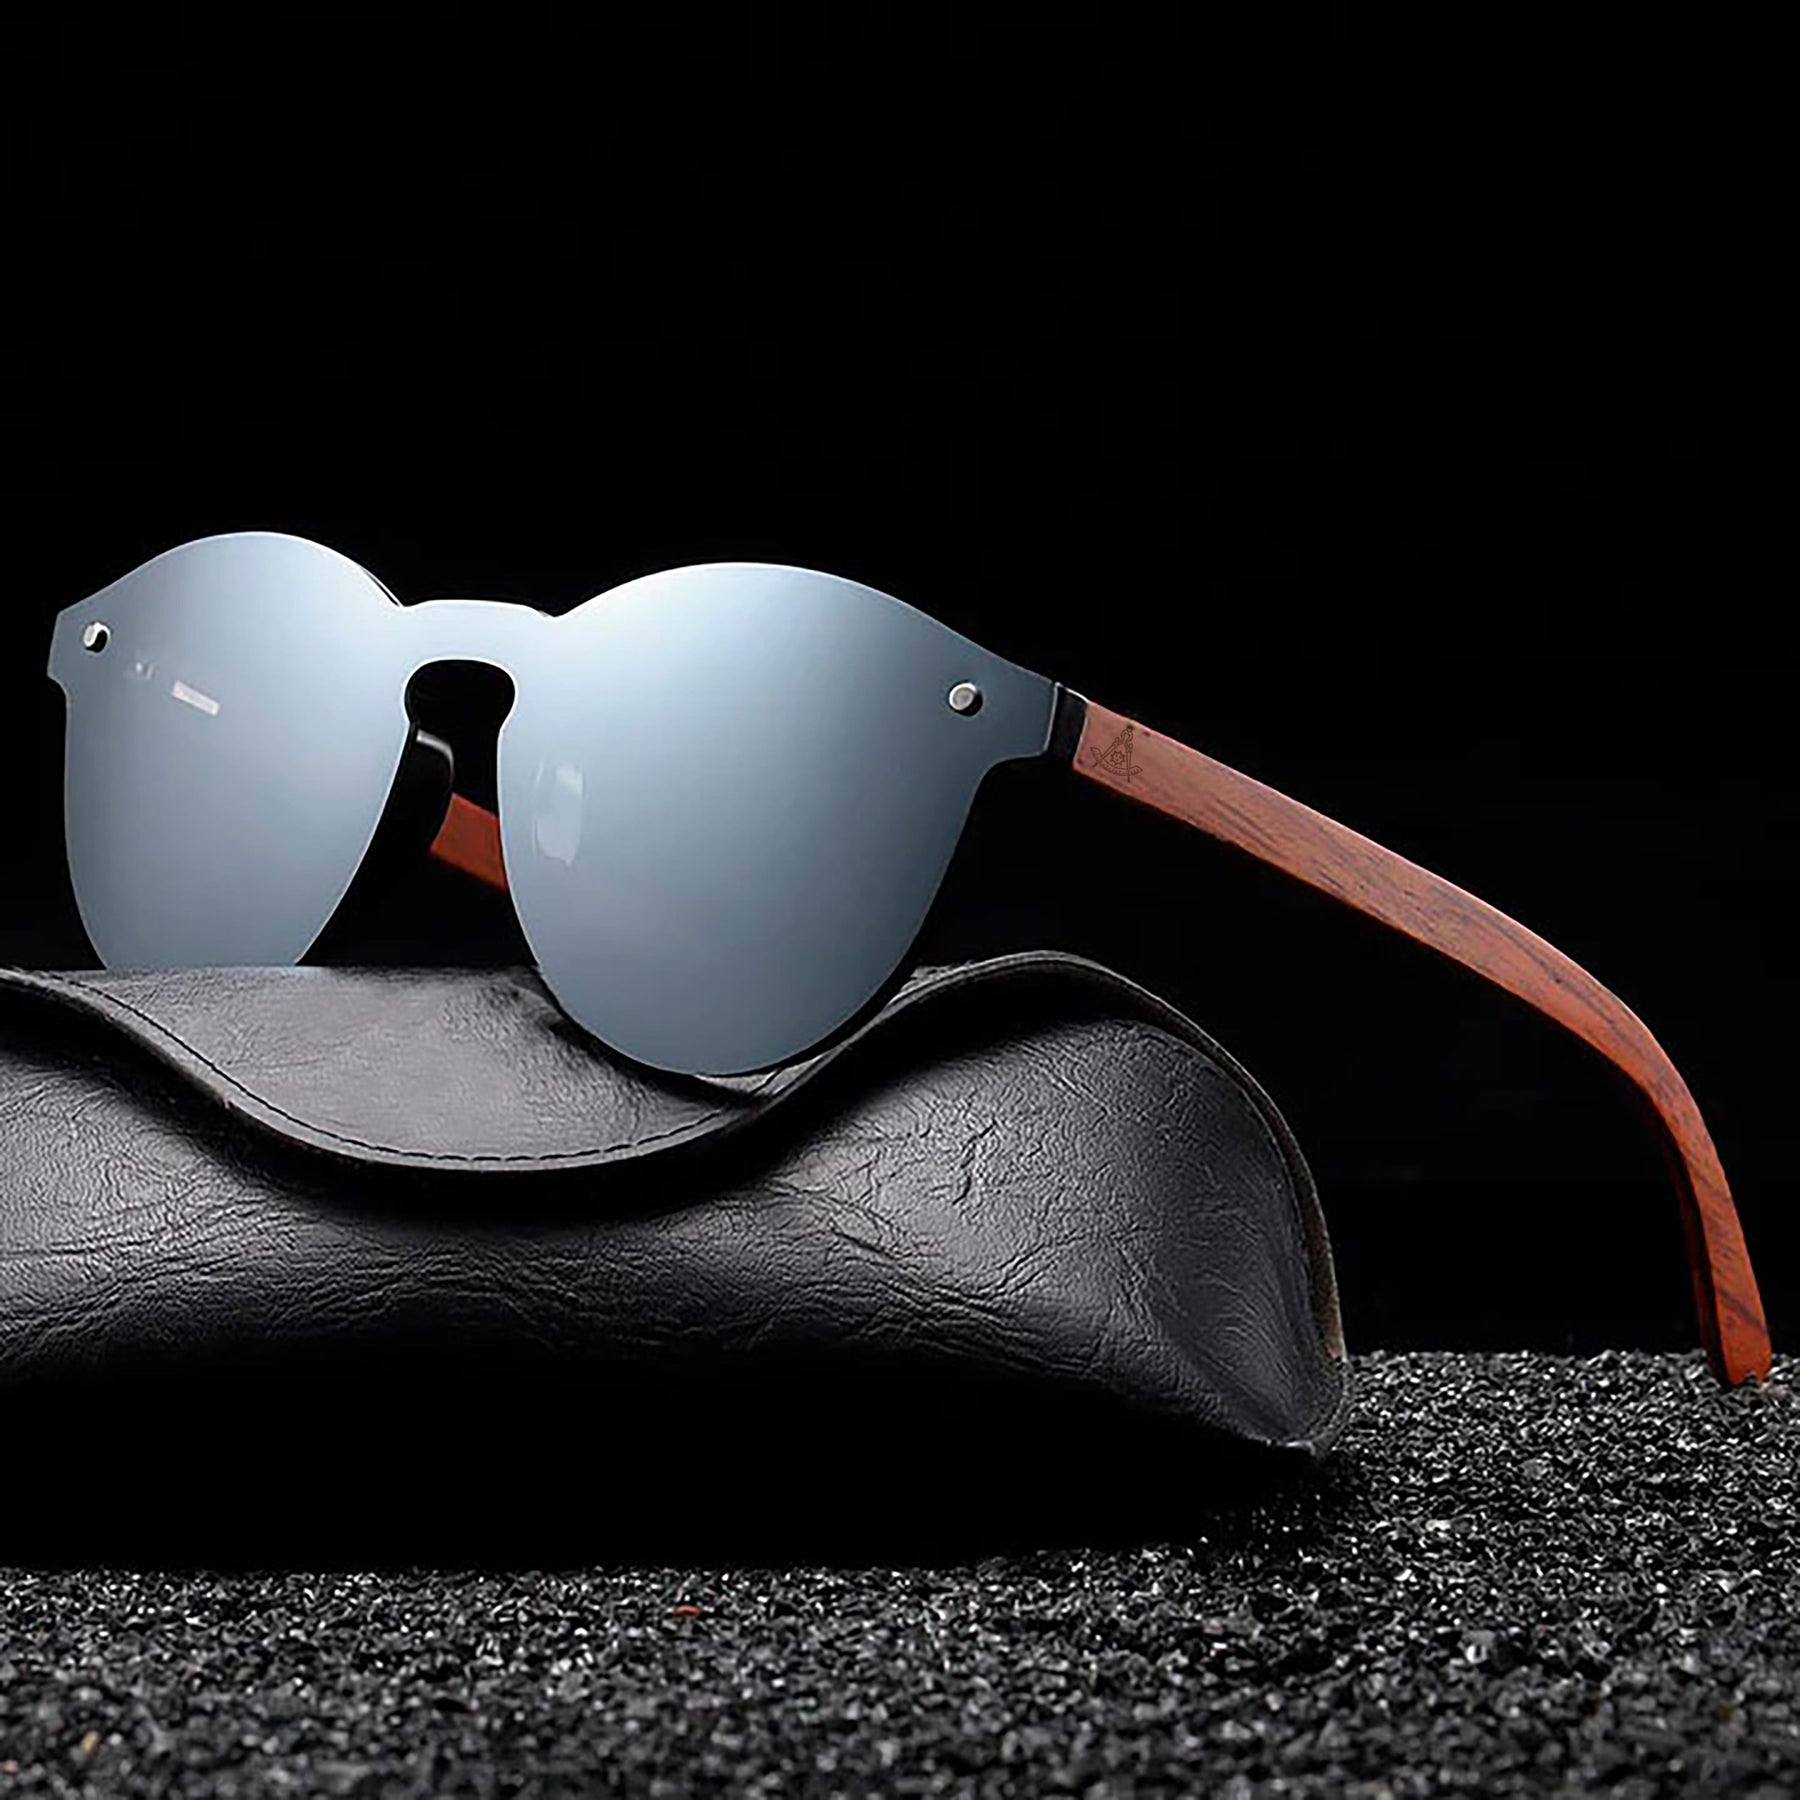 Past Master Blue Lodge California Regulation Sunglasses - Leather Case Included - Bricks Masons